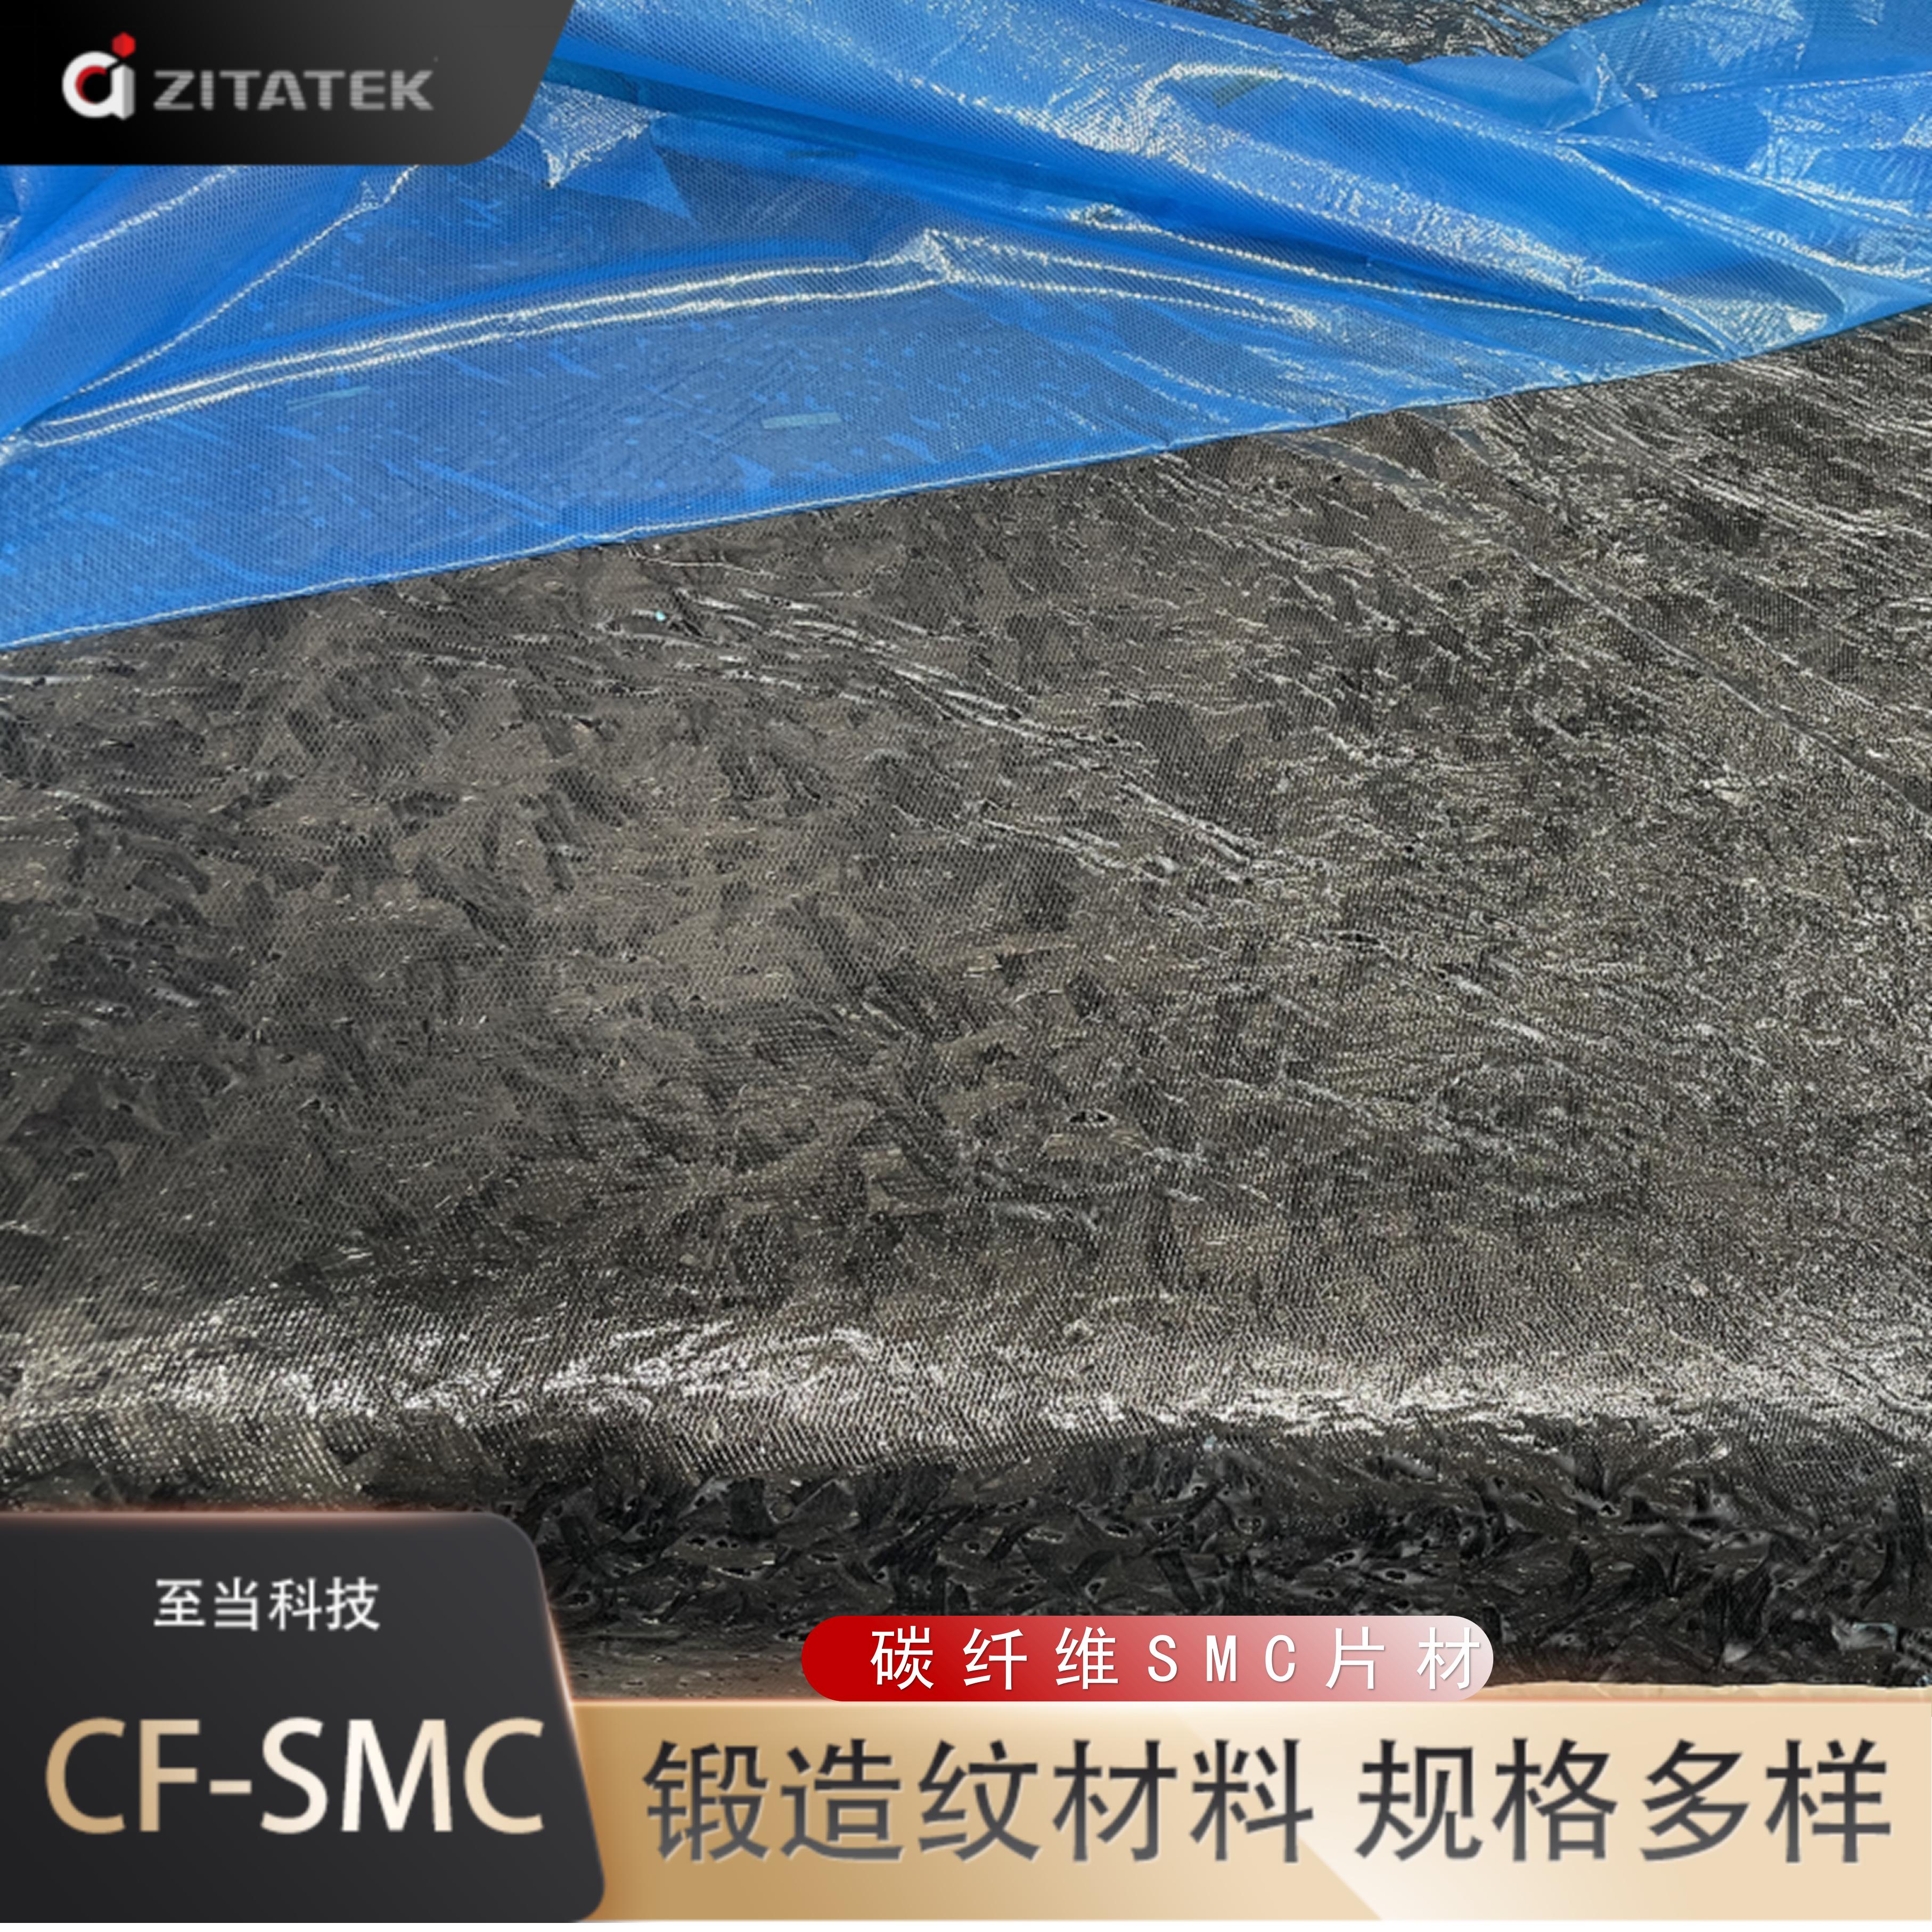 Molded epoxy carbon fiber sheet short cut carbon fiber prepreg CF-SMC forging pattern material supplied by the manufacturer